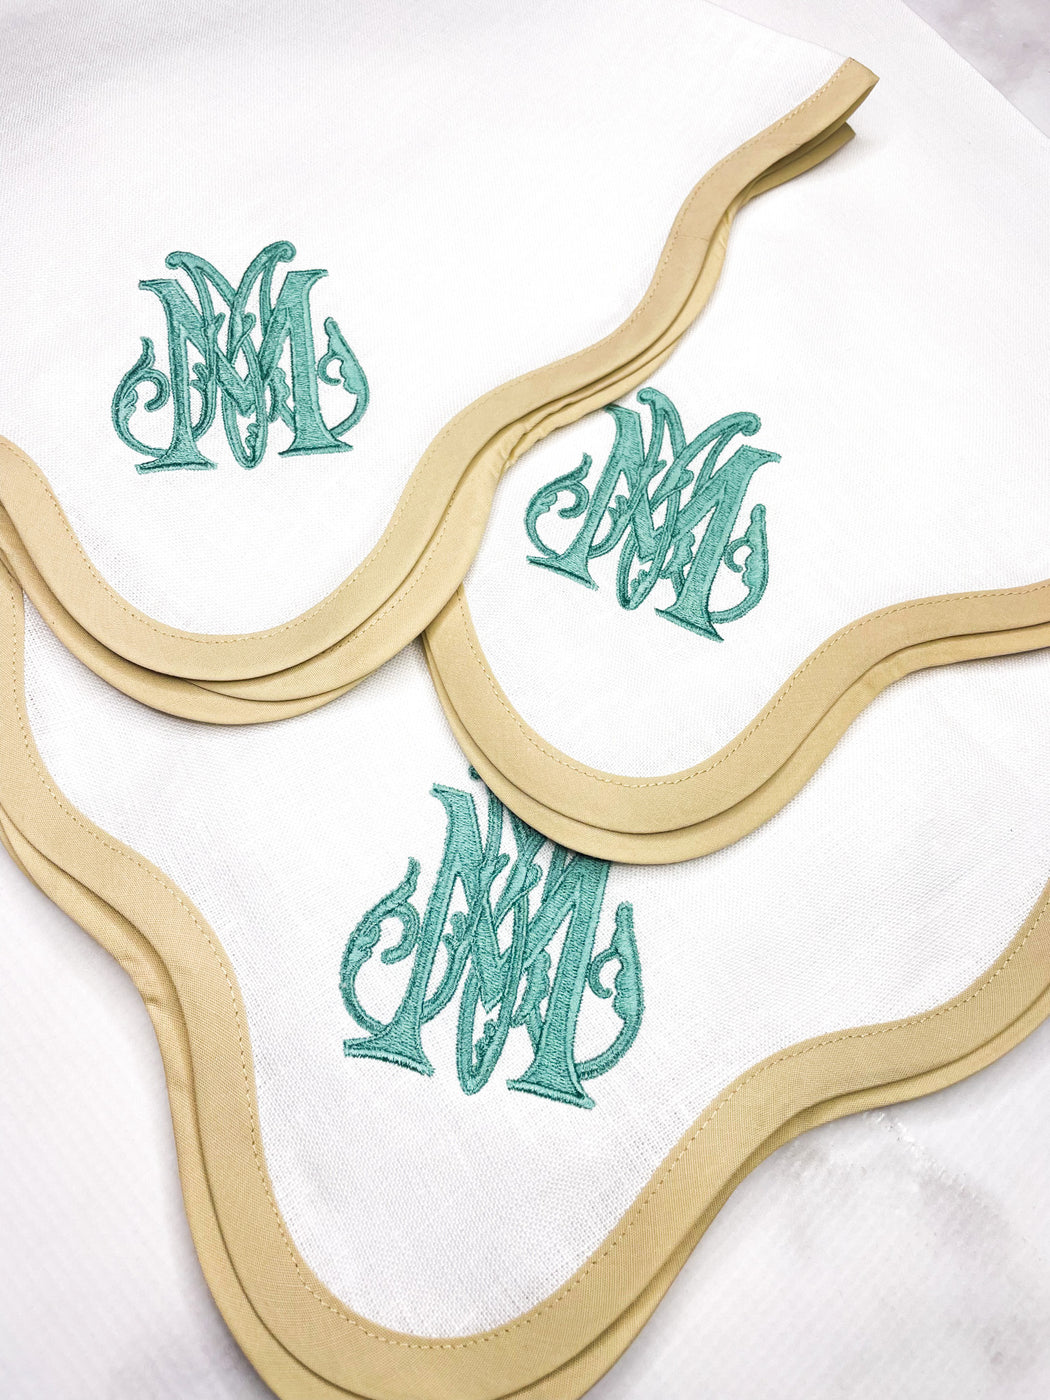 Linen Dinner Napkins with taupe colored trim - Custom Monogram